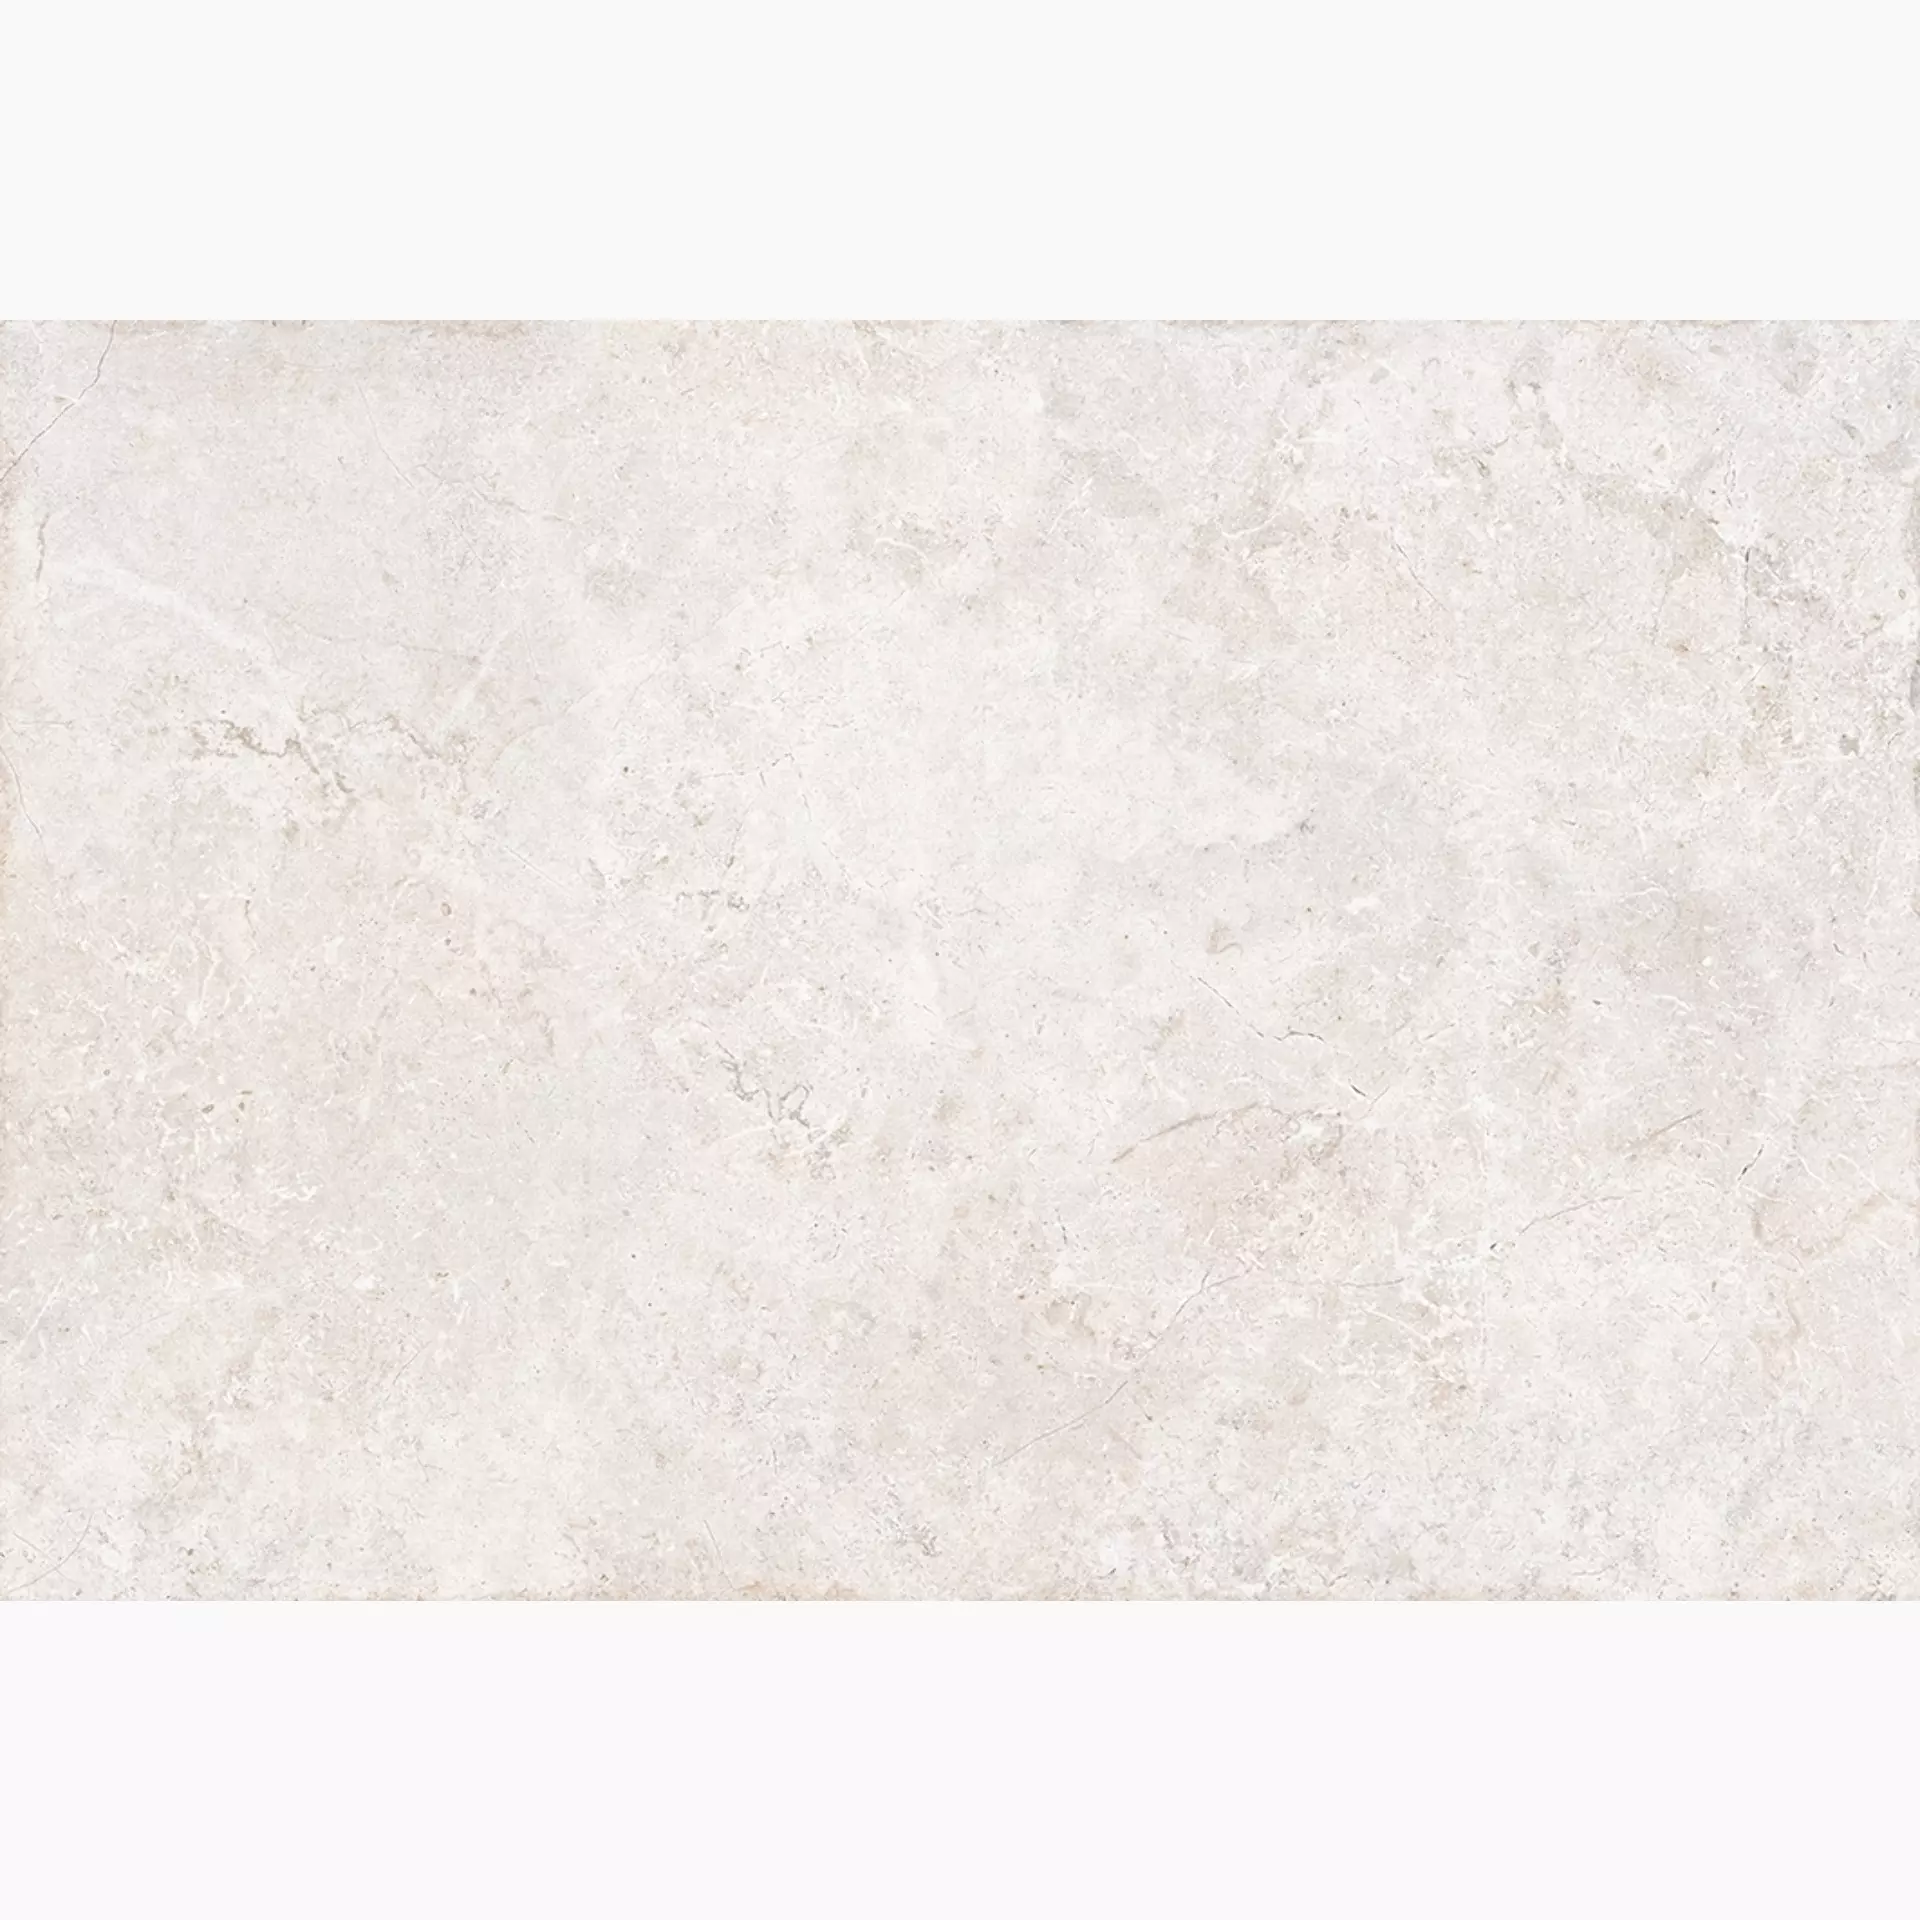 Sichenia Amboise Bianco Grip Chipped Edge 0193521 60x90cm rectified 10mm